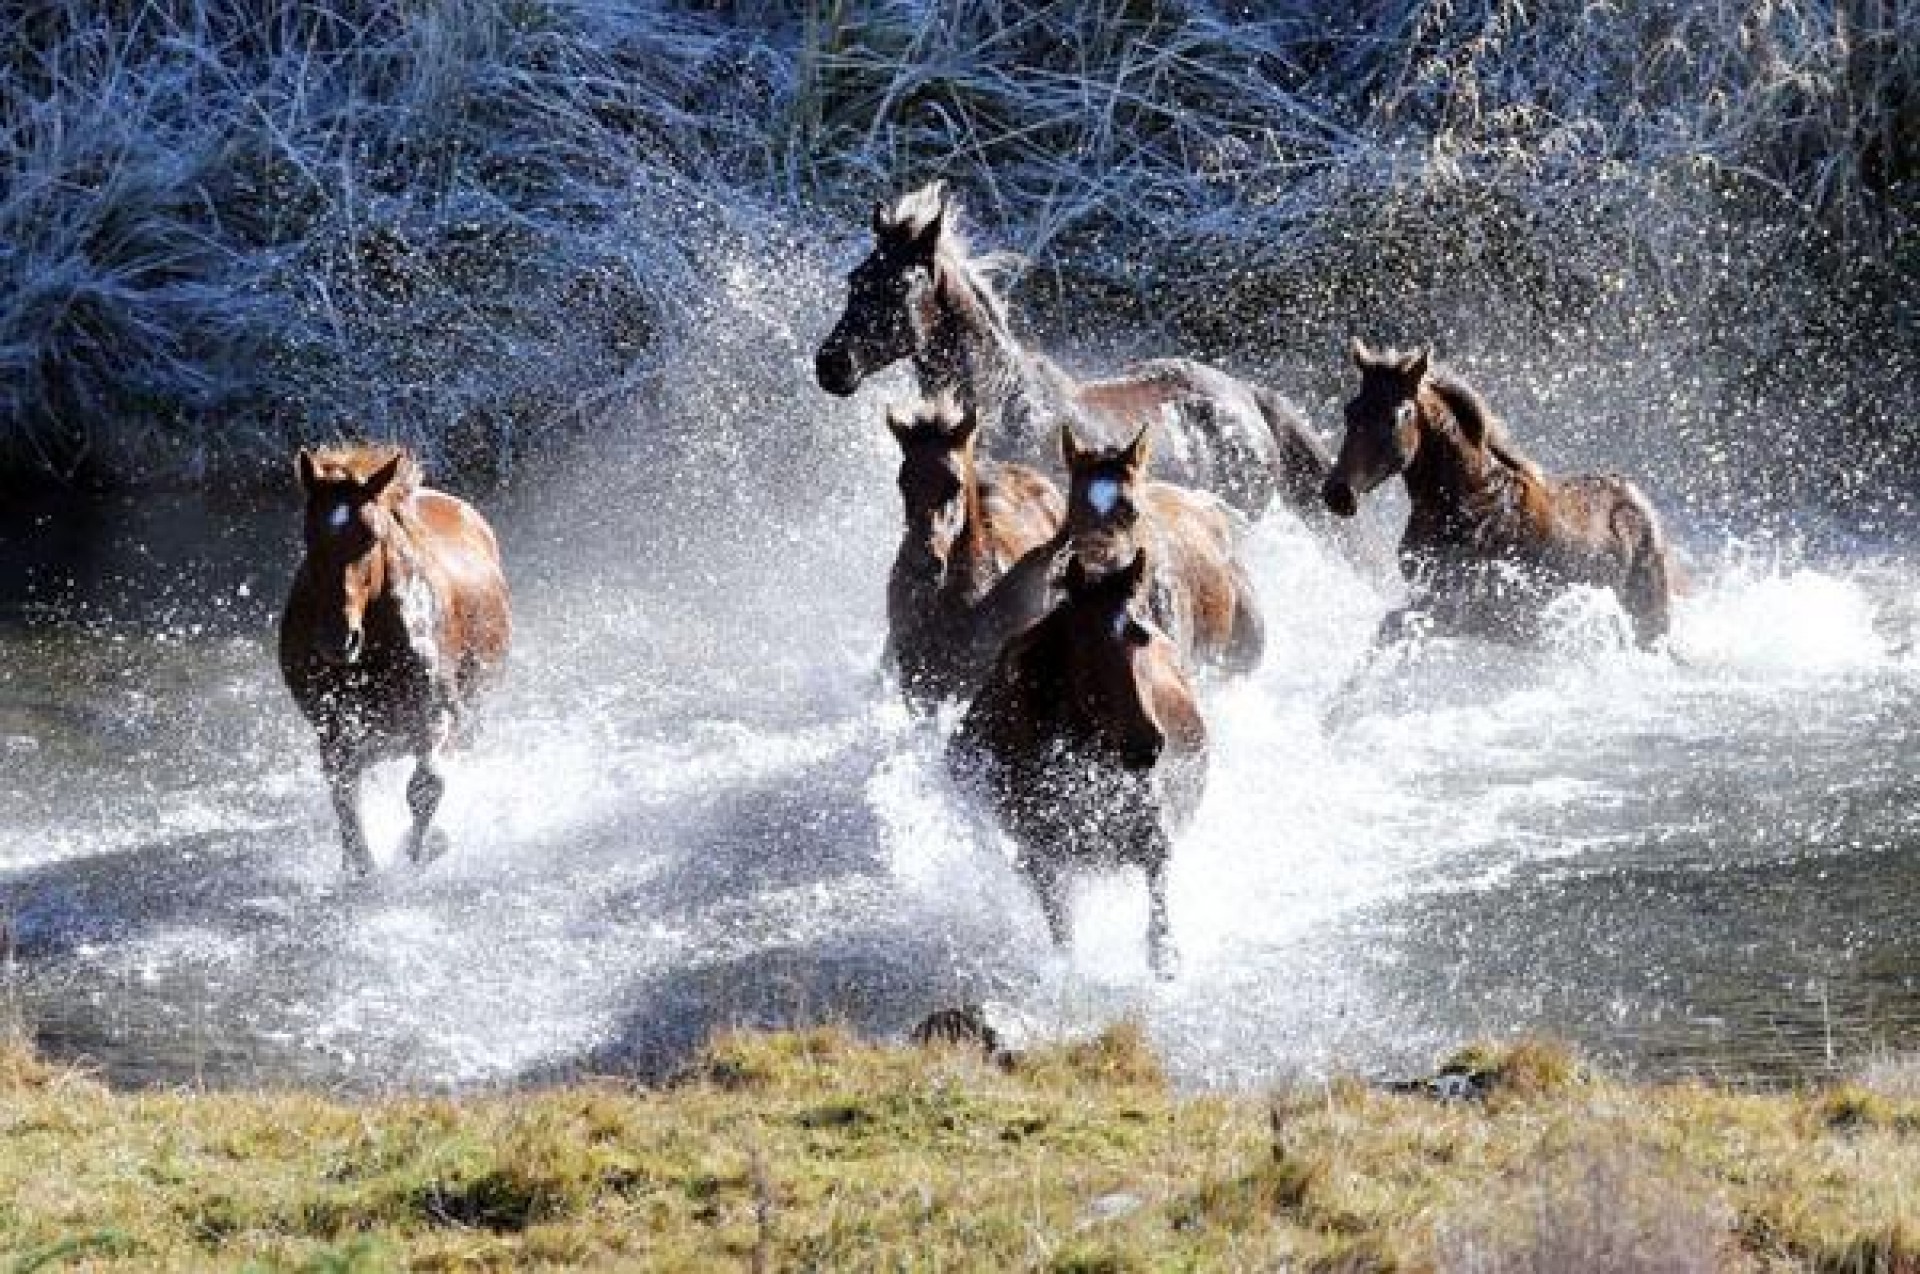 The Wild Horses of the Kaimanawa Ranges.